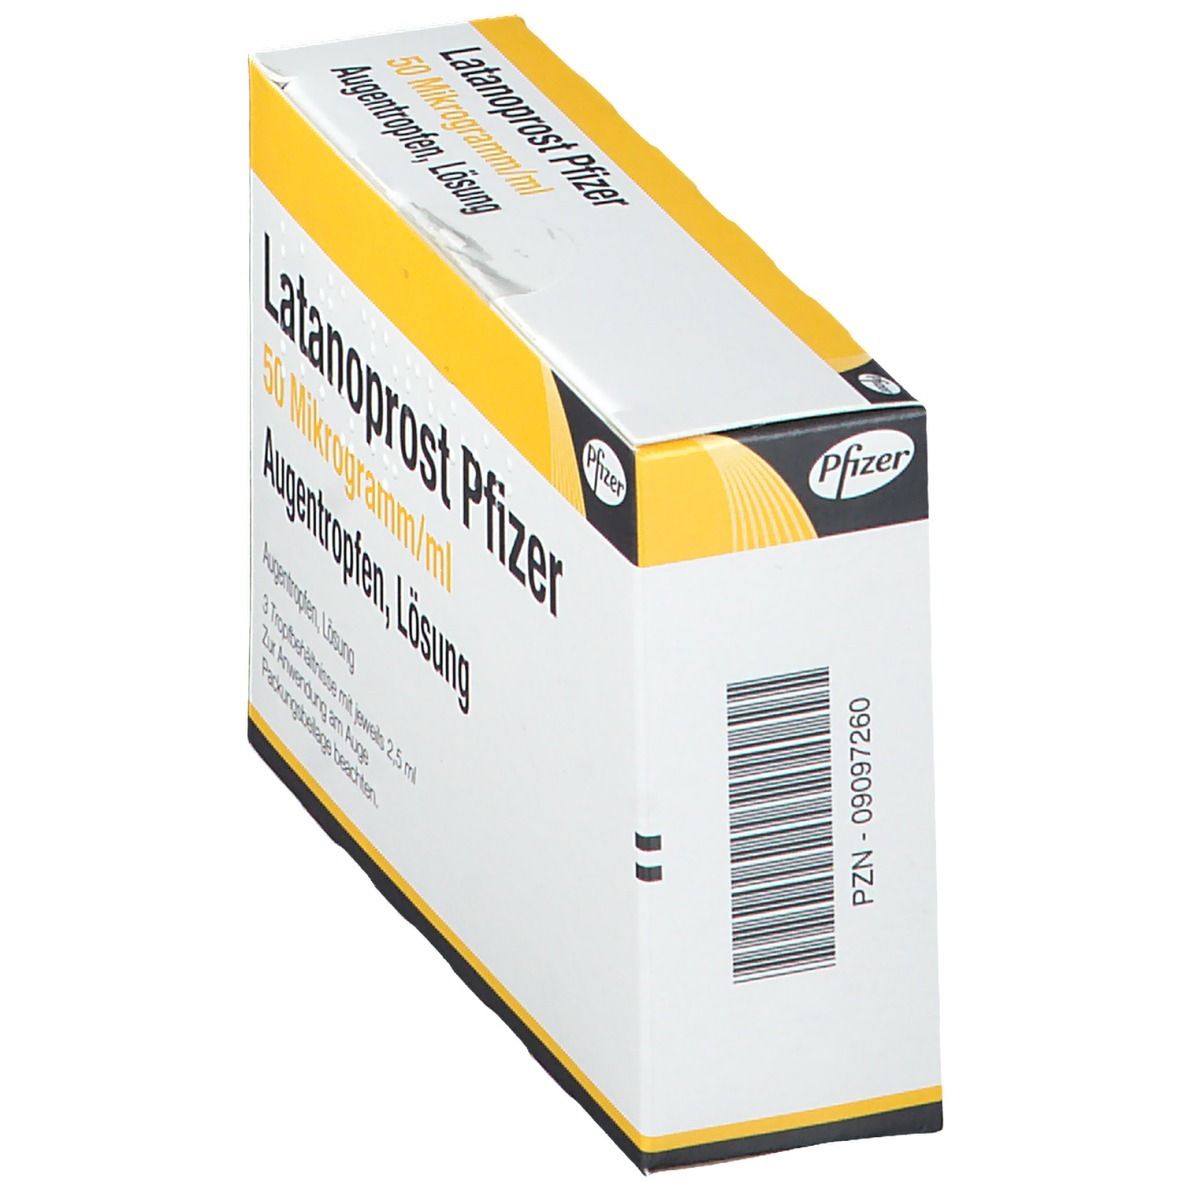 Latanoprost Pfizer 50 Mikrogramm/ml